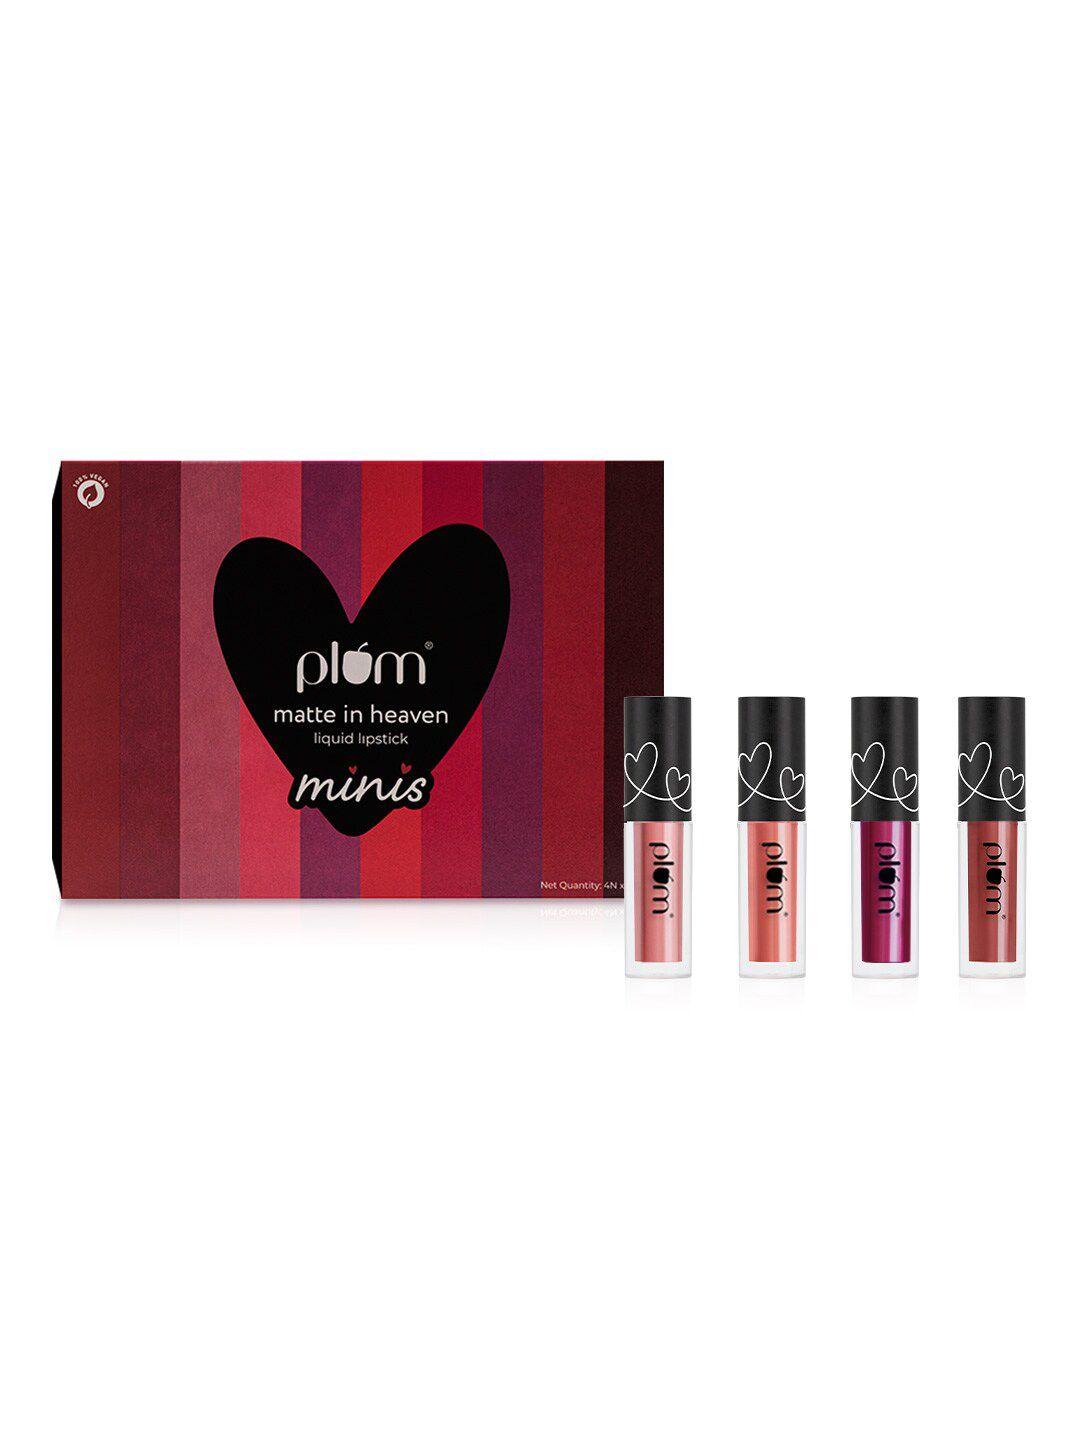 plum set of 4 smudge-proof matte in heaven mini liquid lipsticks - 1.5ml each